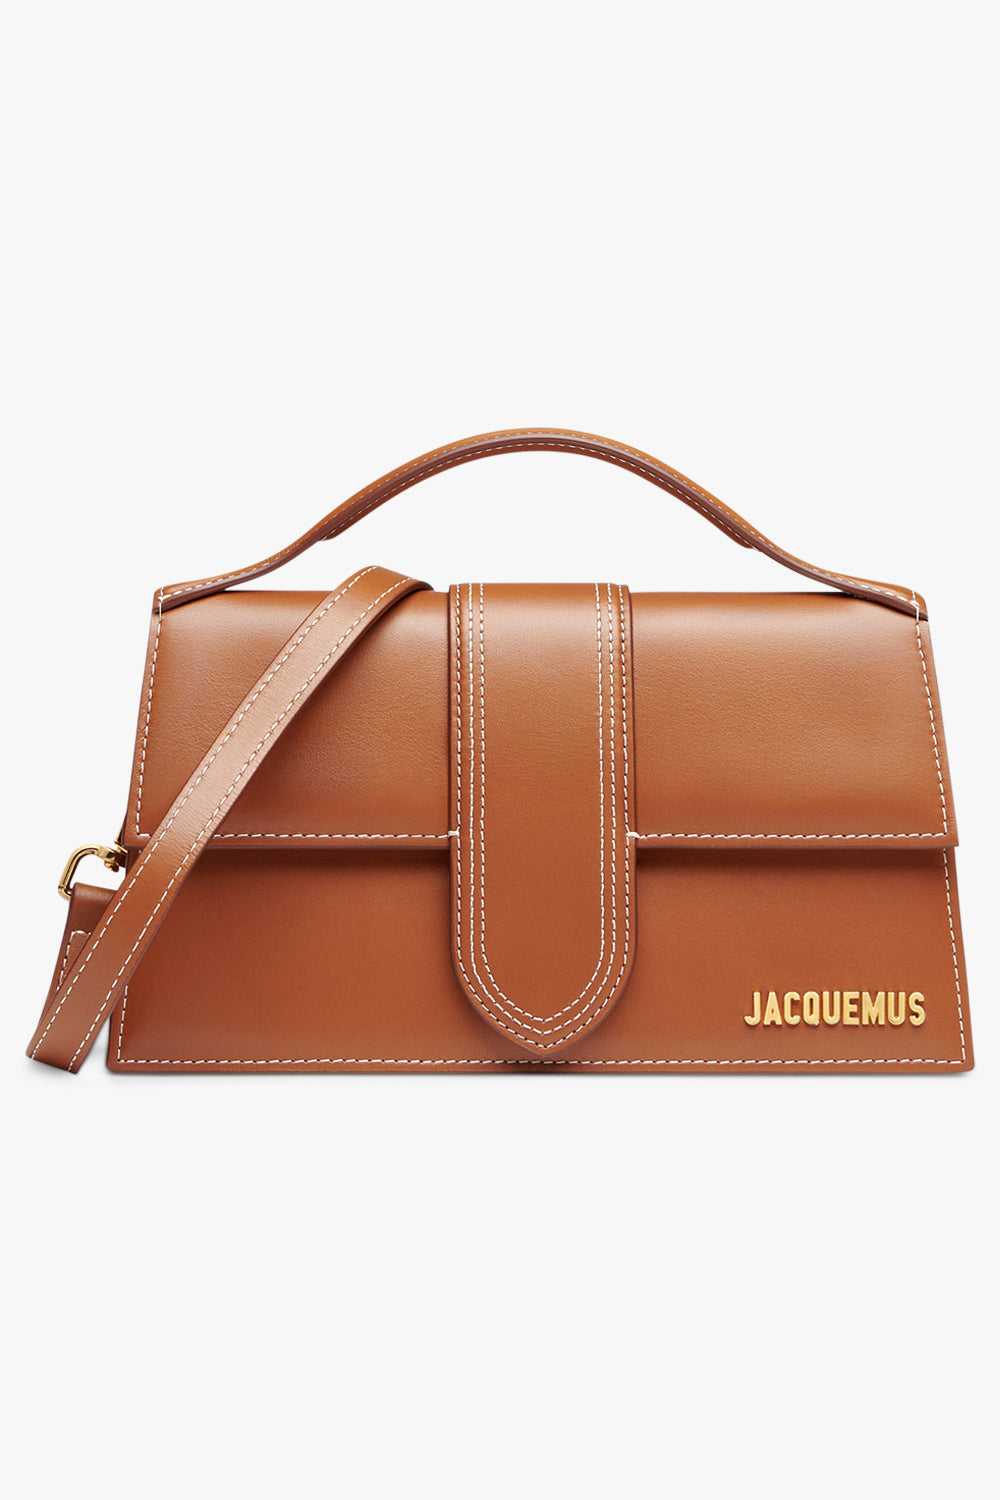 JACQUEMUS BAGS BROWN LE GRAND BAMBINO BAG | LIGHT BROWN